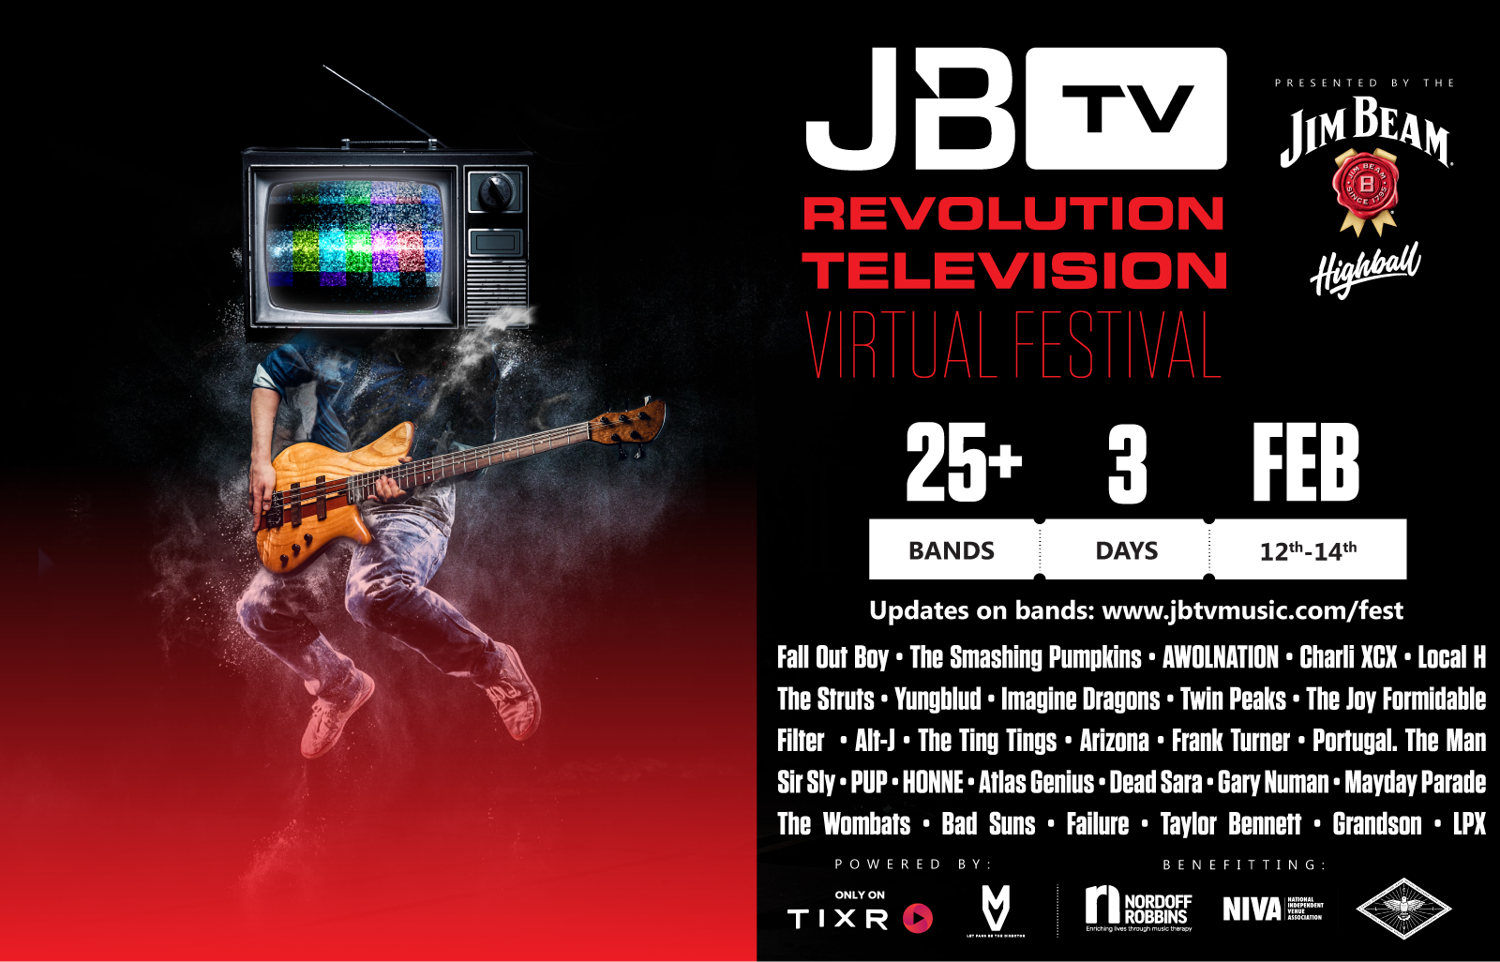 JBTV Revolution Television Virtual Festival - Presented by the Jim Beam® Highball - Feb 12-14, 2021 | JBTVmusic.com